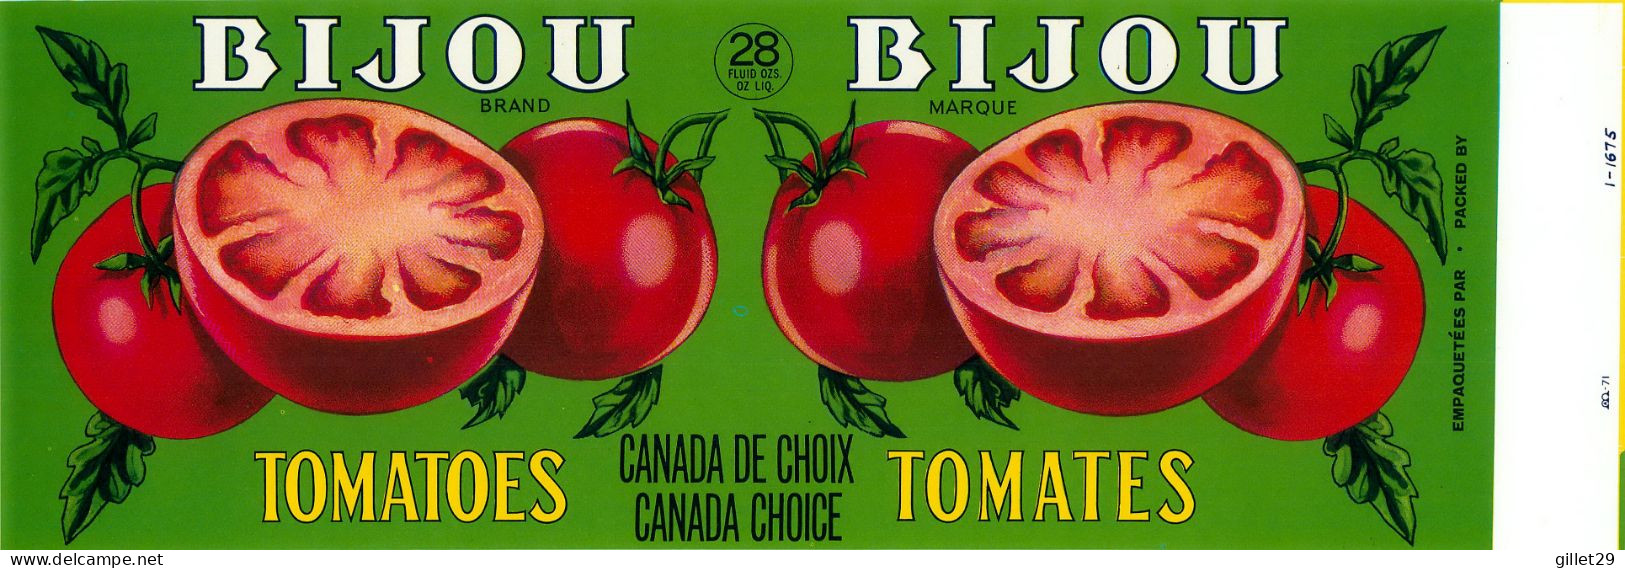 ÉTIQUETTES - BIJOU BRAND TOMATOES - BIJOU MARQUE TOMATES - - 28 OZS CANADA - DIMENSION 11 X 33 Cm - - Frutas Y Legumbres